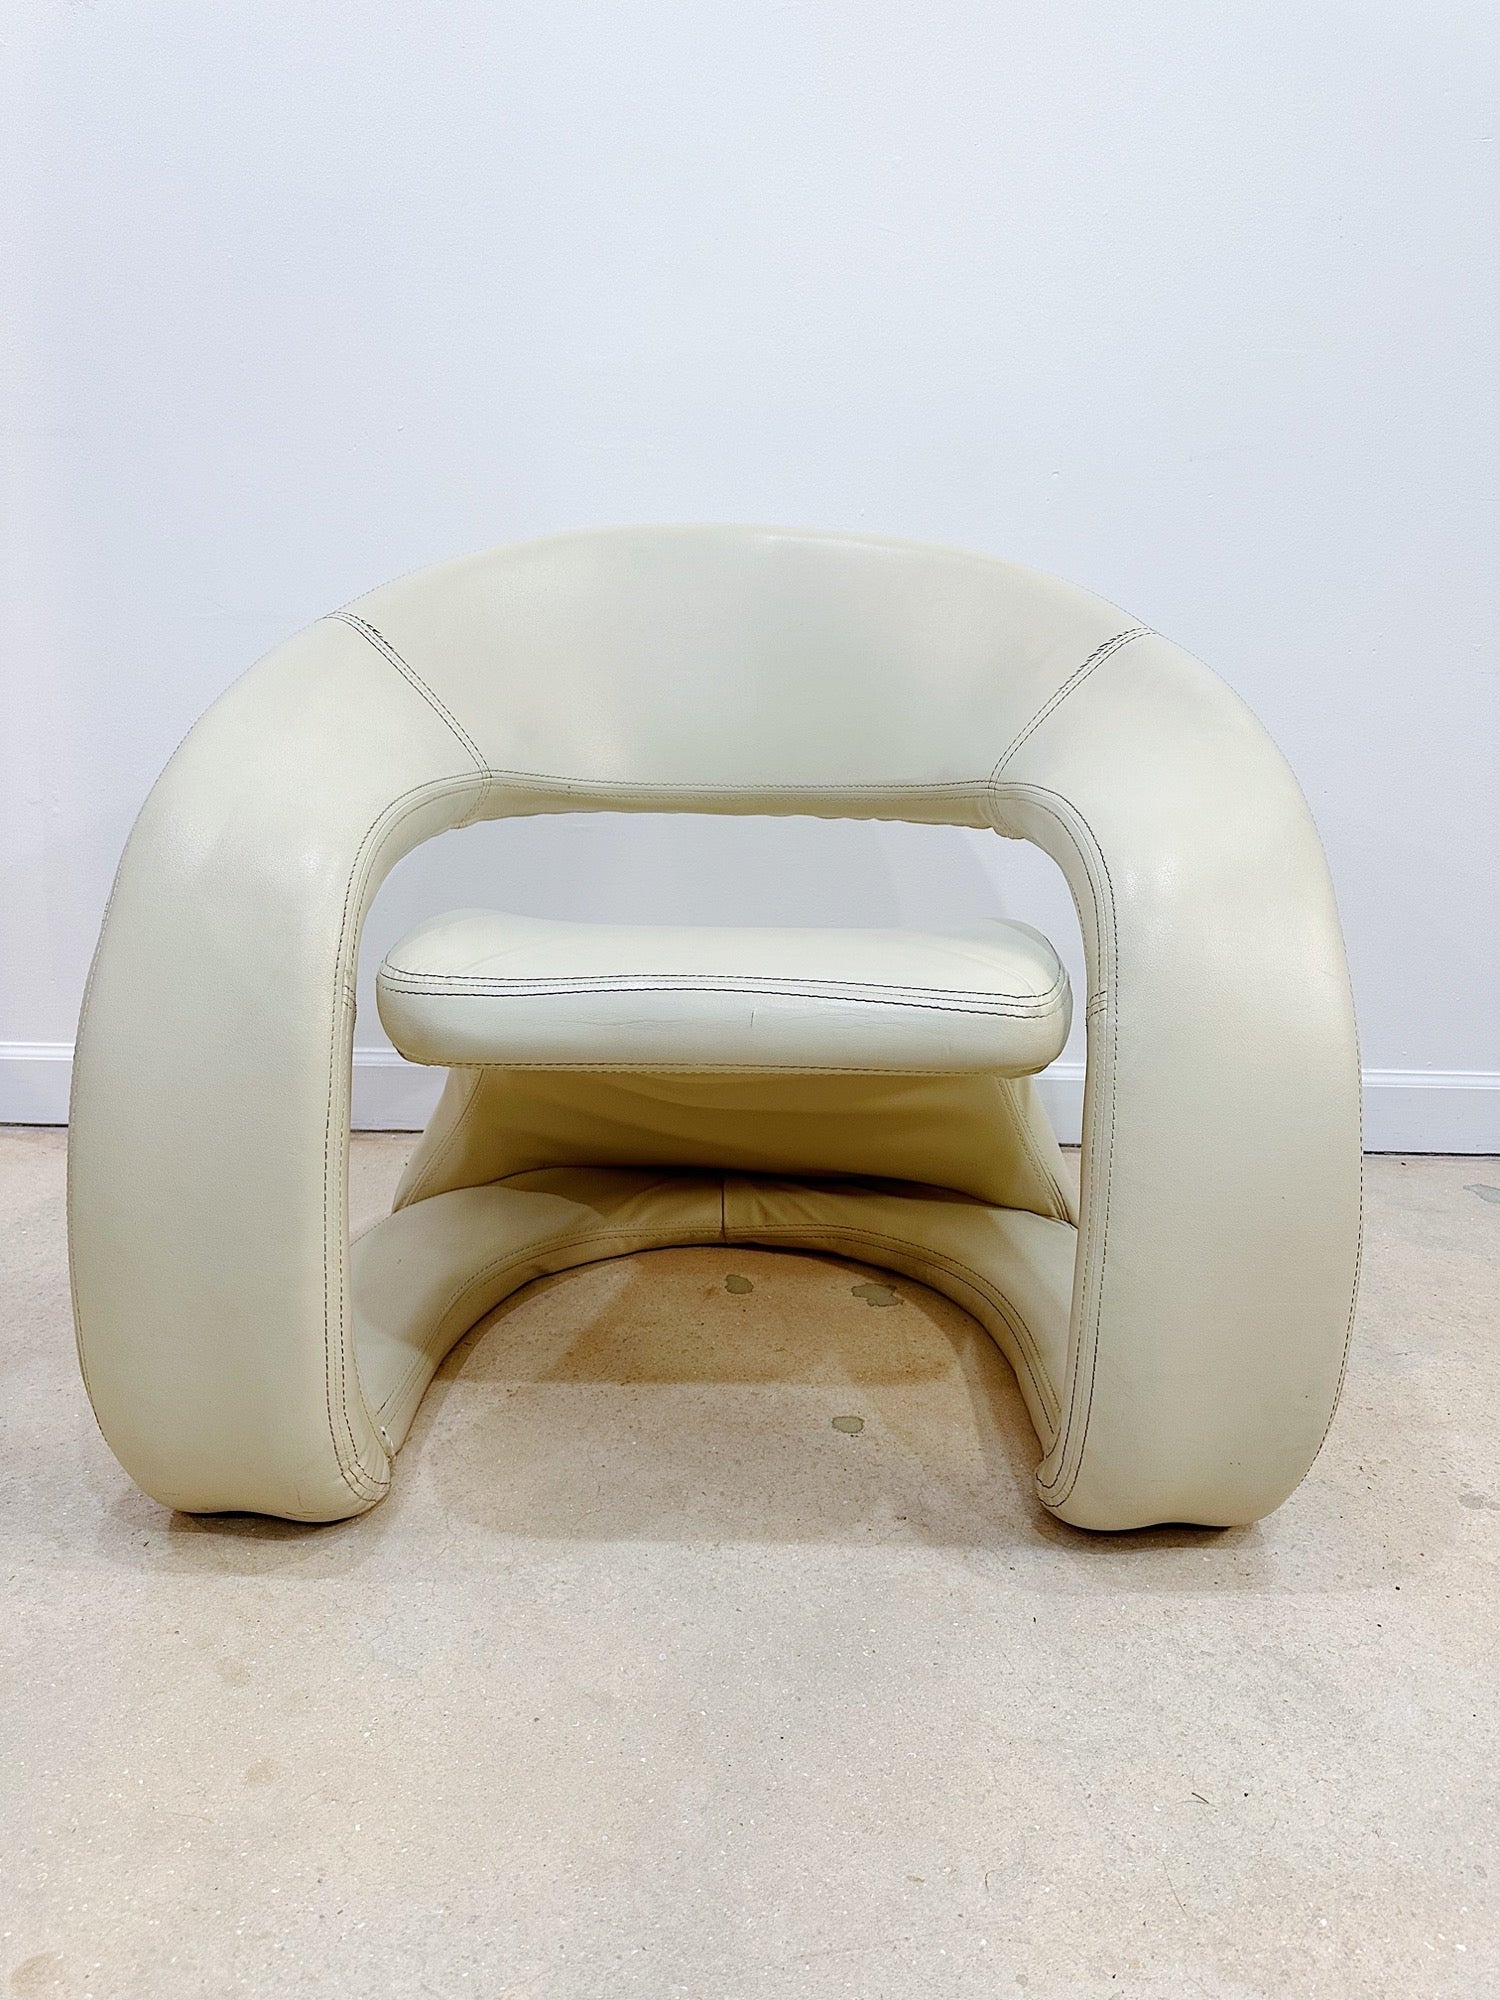 Jaymar-Style Tongue Chair - Rehaus